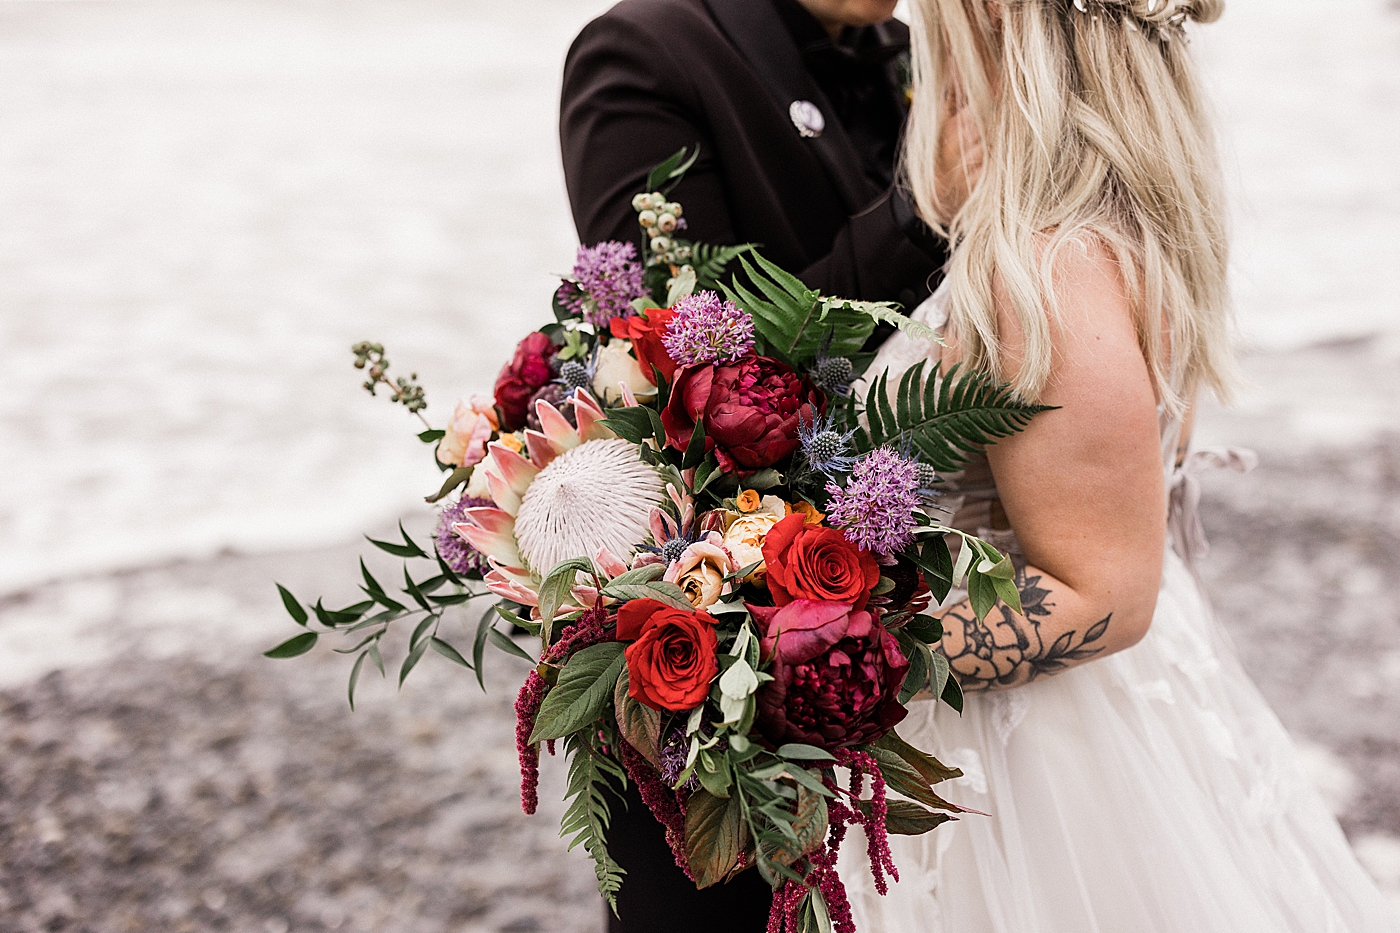 Bridal bouquet for elopement. Photo by Megan Montalvo Photography.